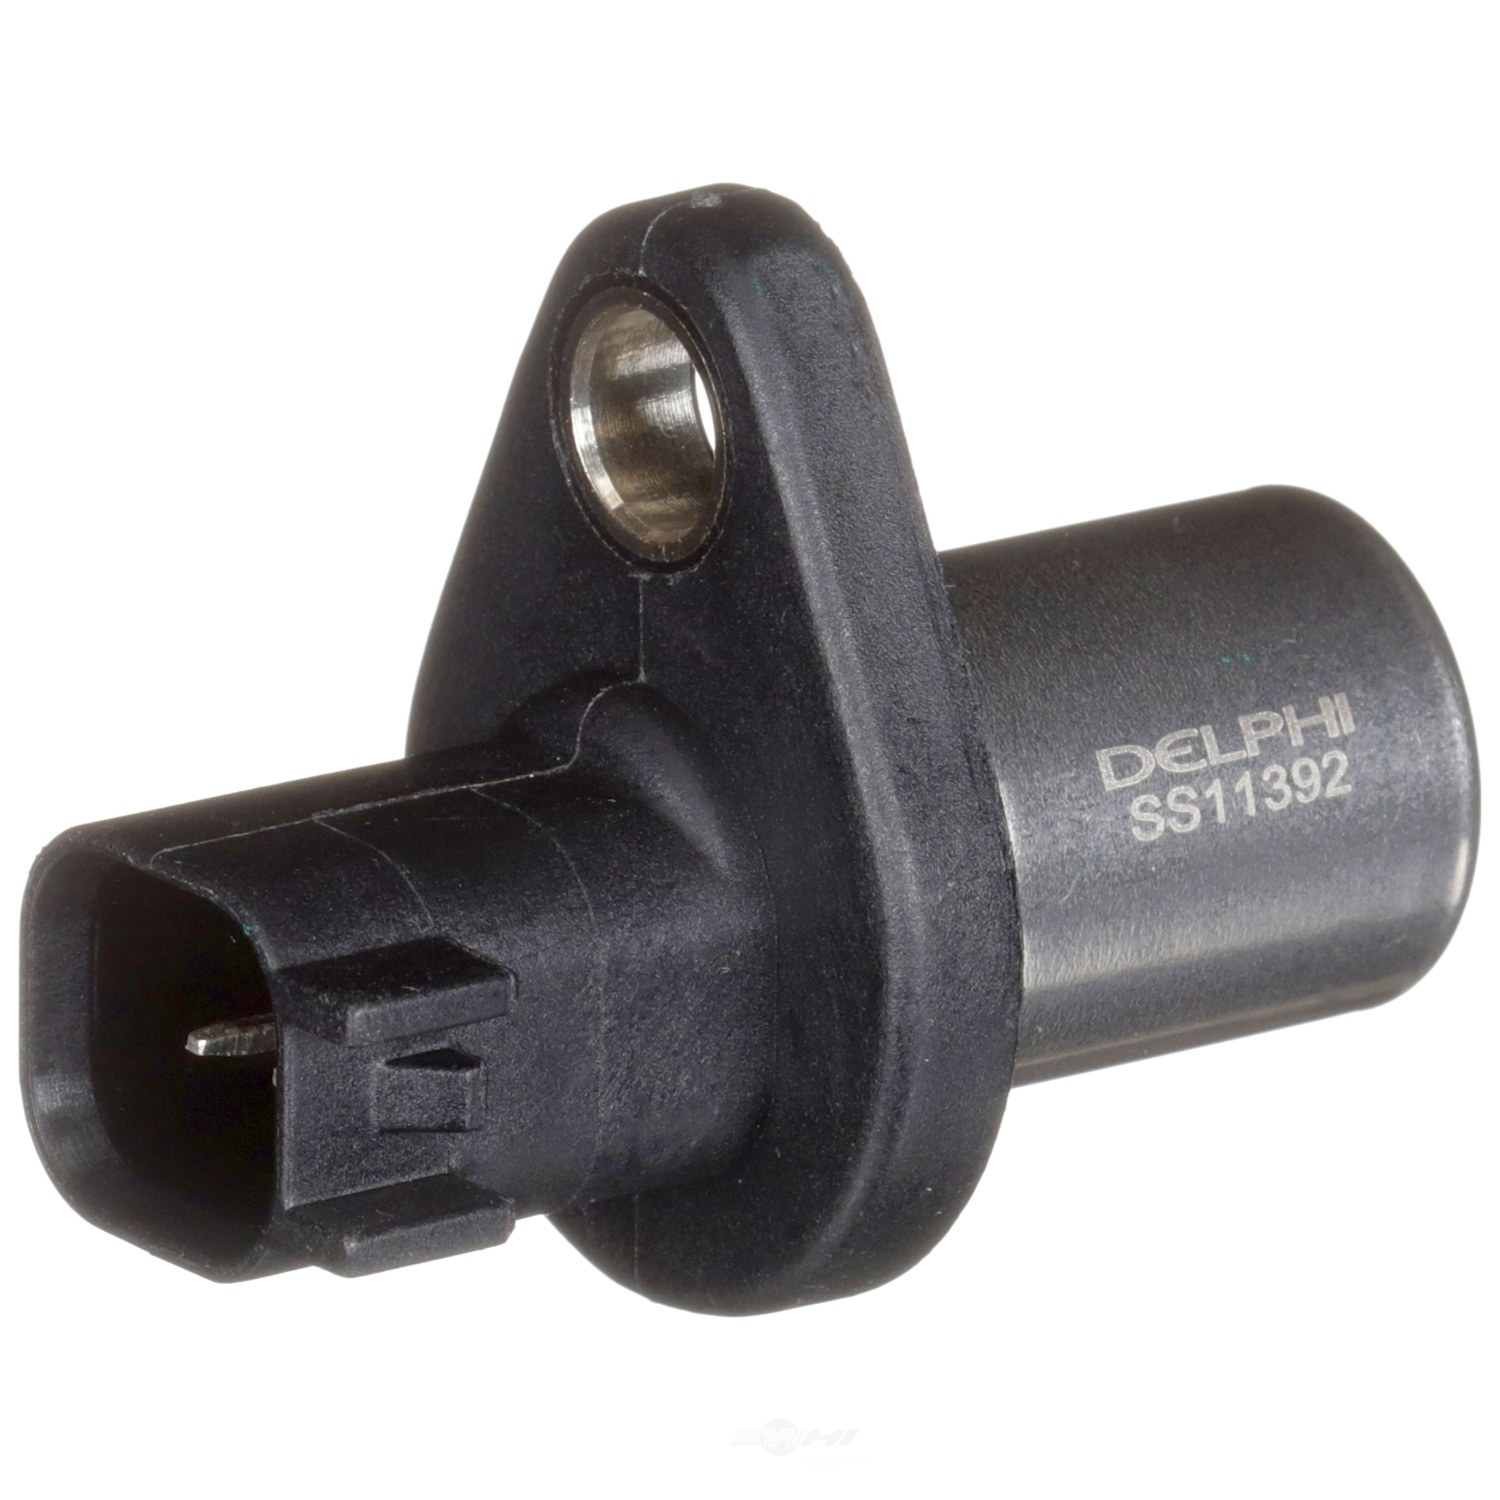 DELPHI - Engine Crankshaft Position Sensor - DPH SS11392